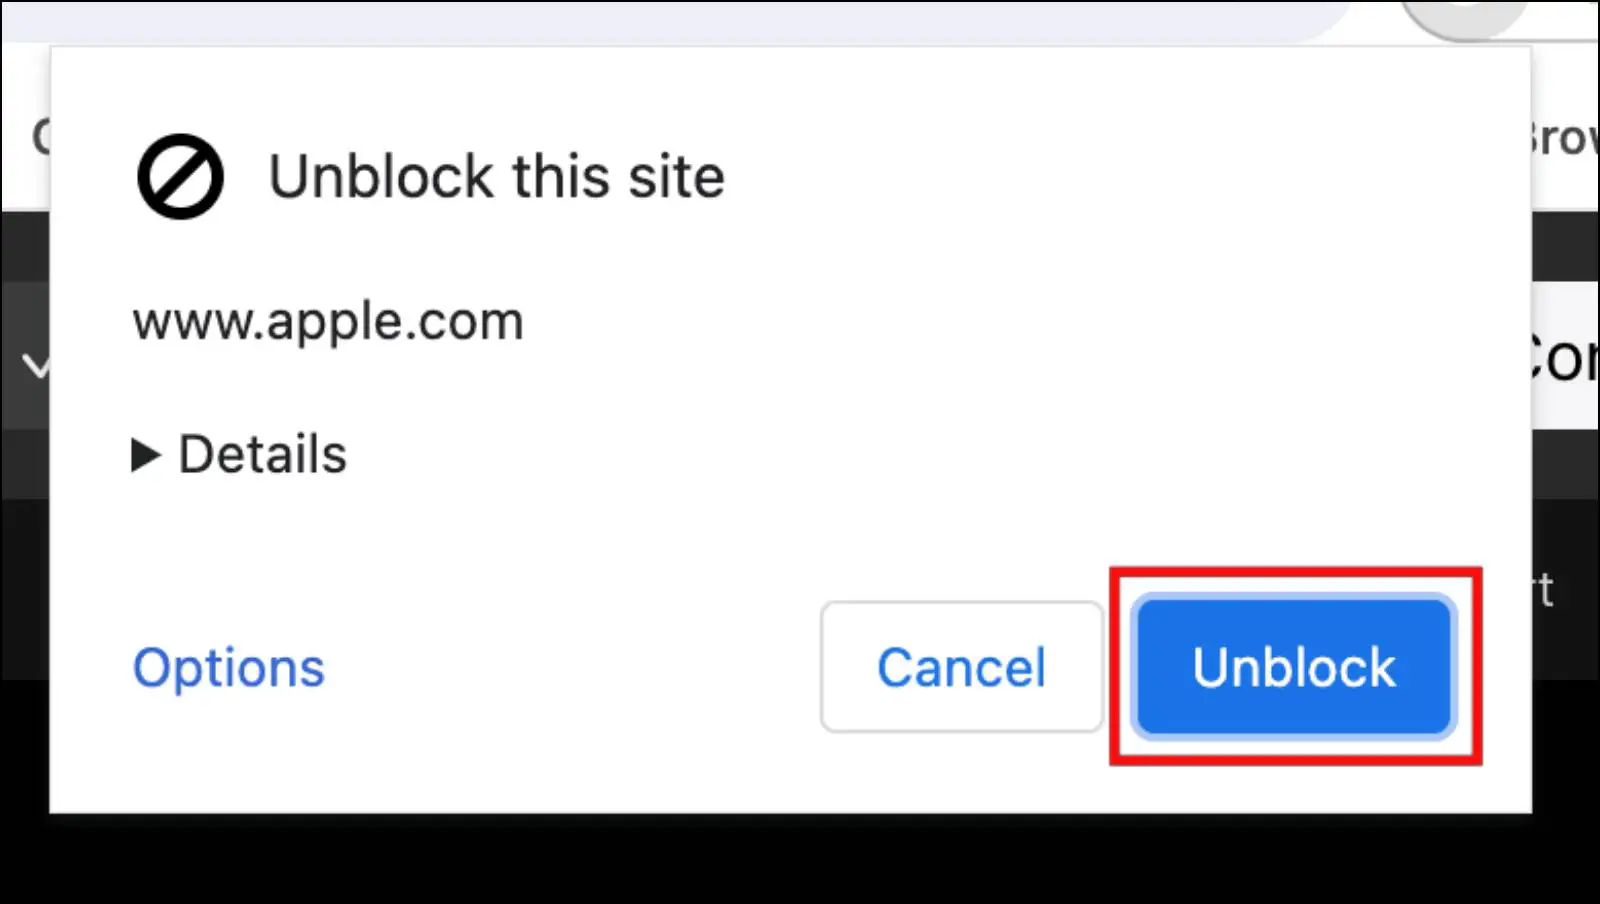 Unblock a Website by Choosing Unblock option